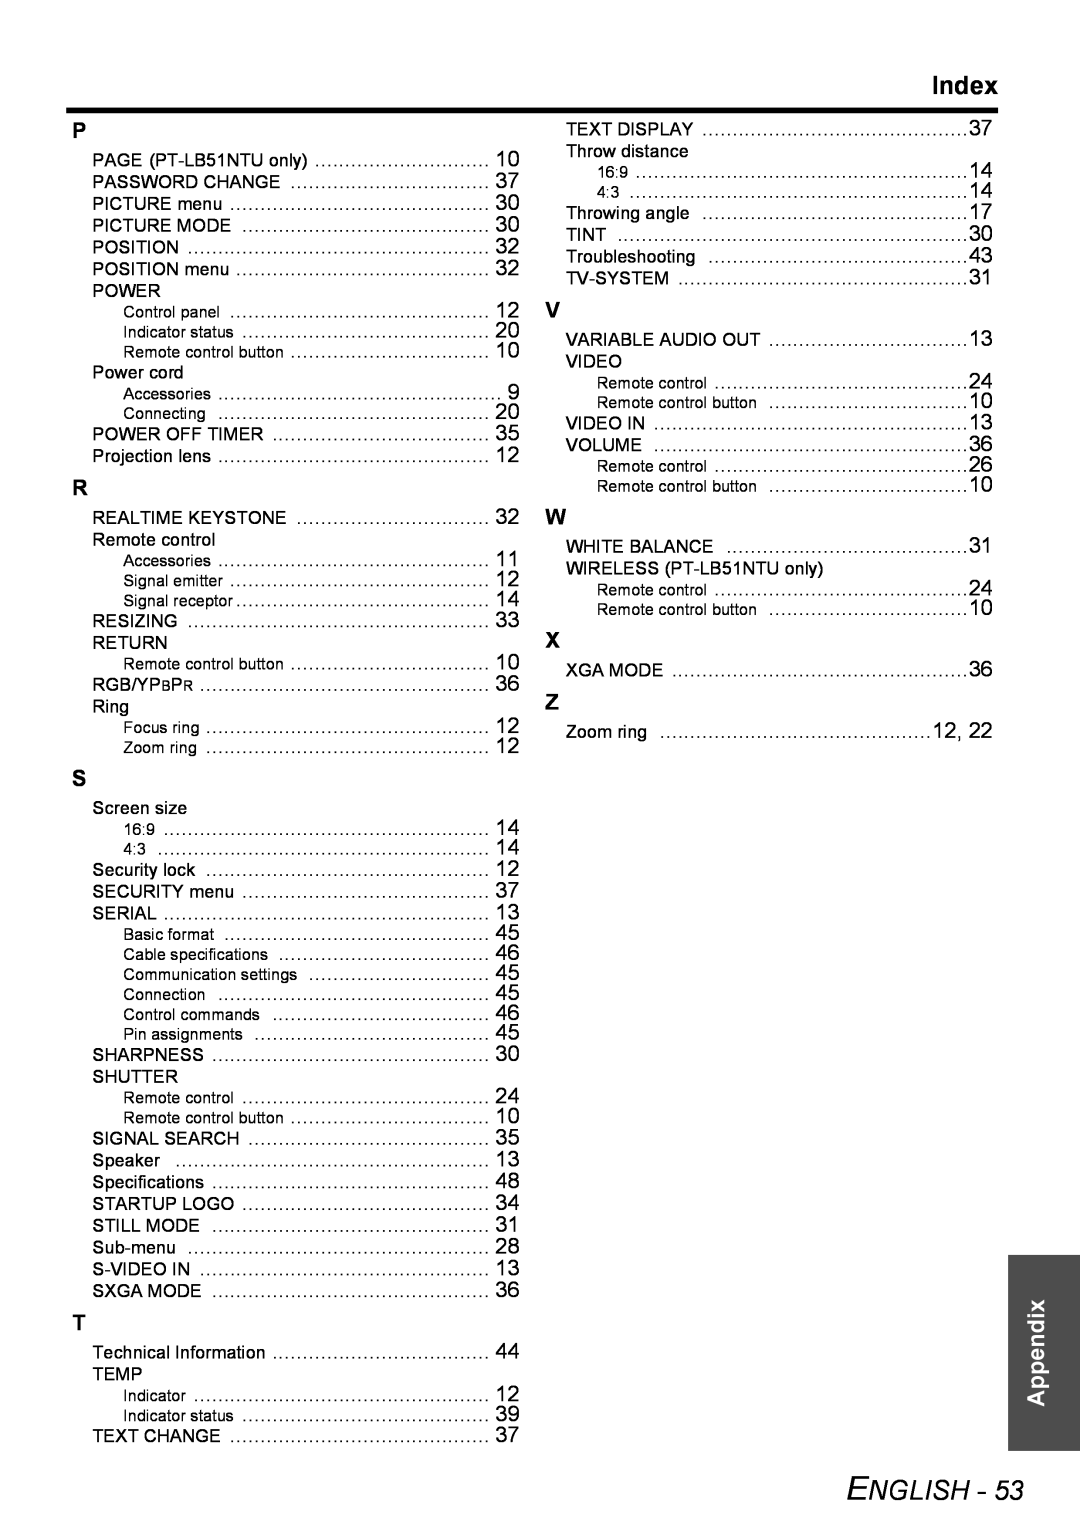 Panasonic PT-LB51NTU operating instructions Index, English, Appendix 